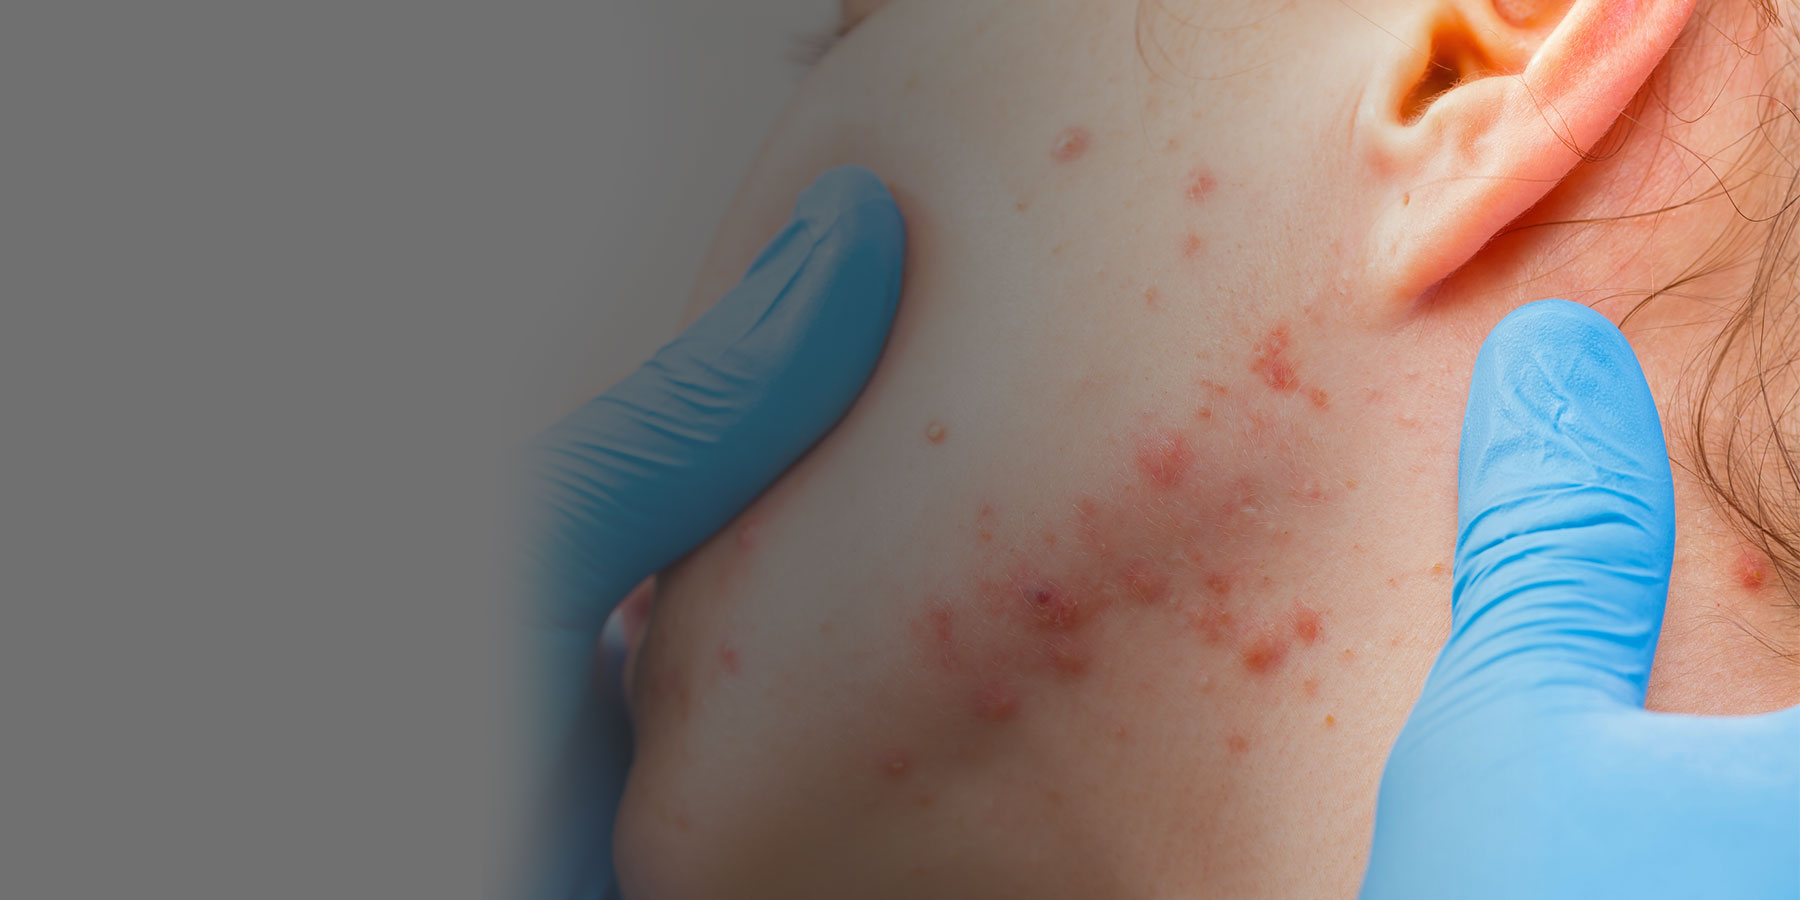 DermoDirect dermatologists are acne experts